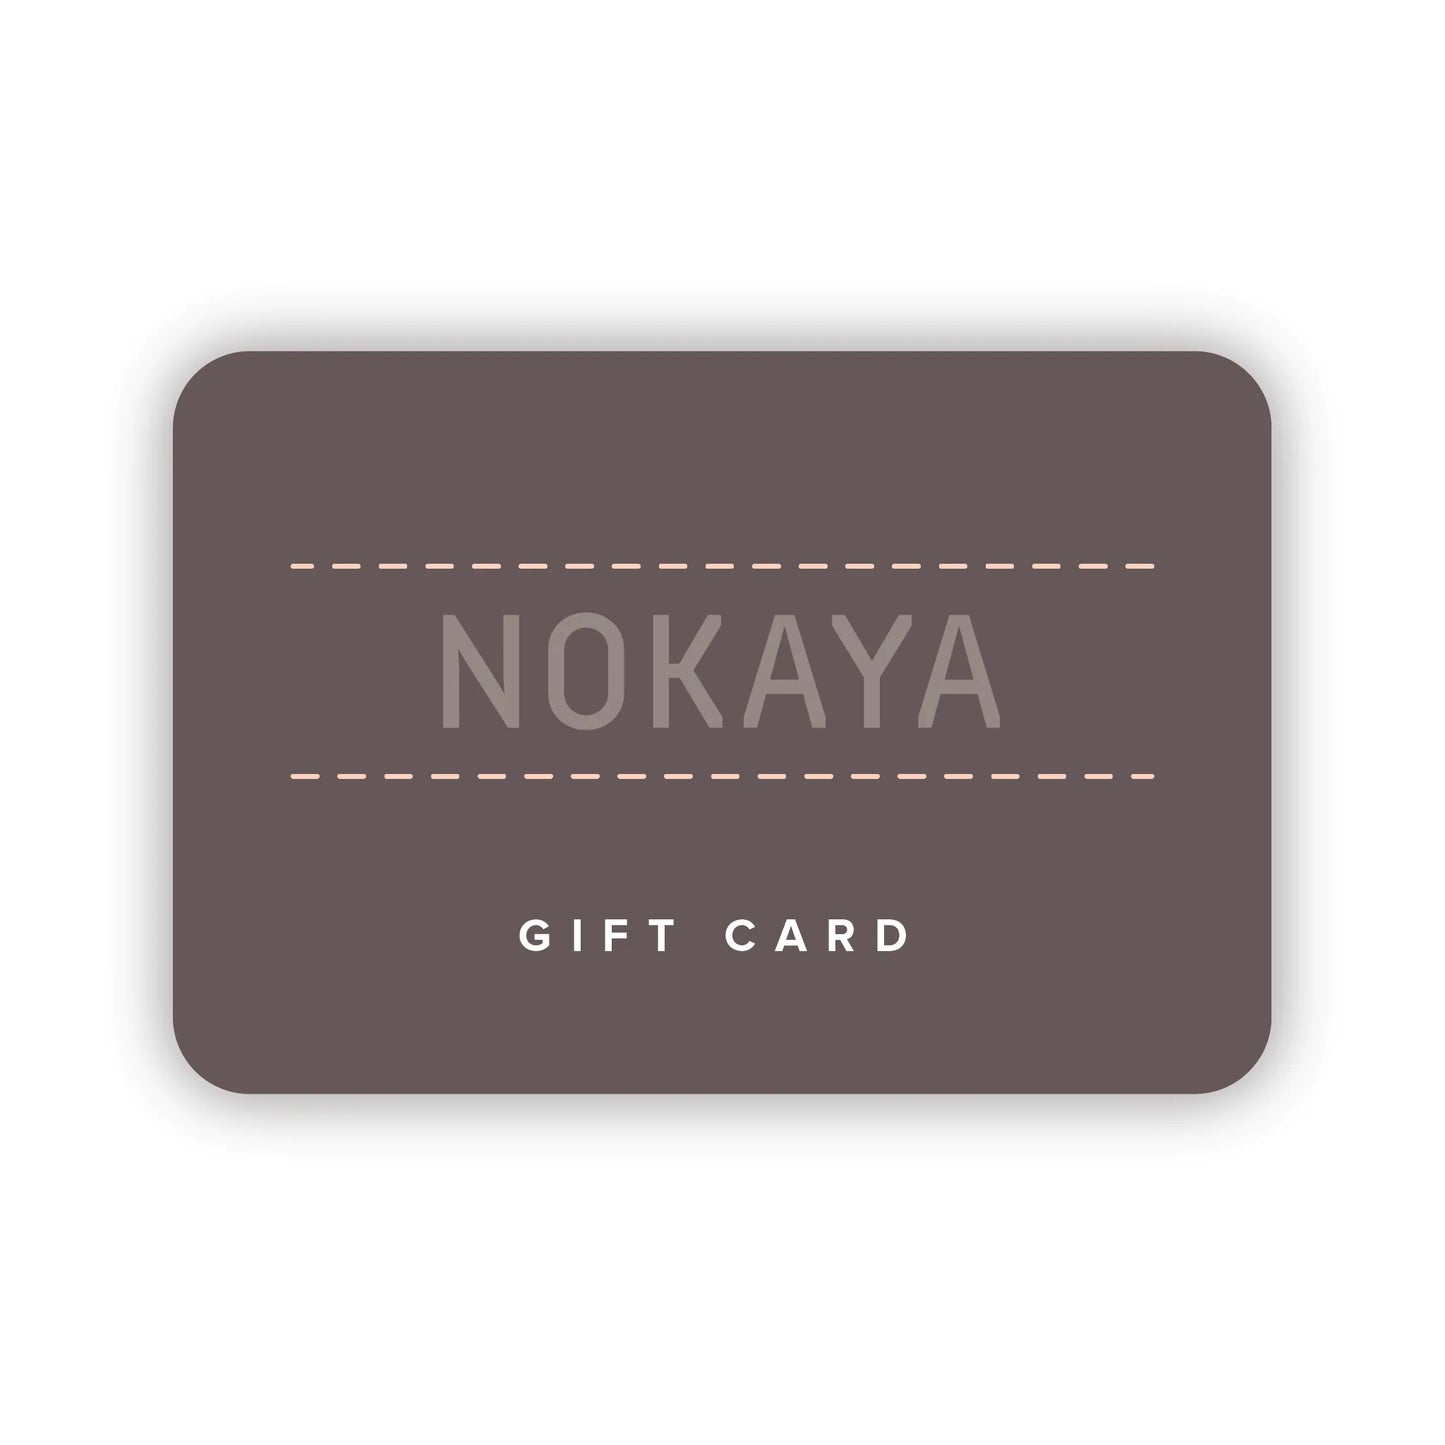 NOKAYA GIFT CARD